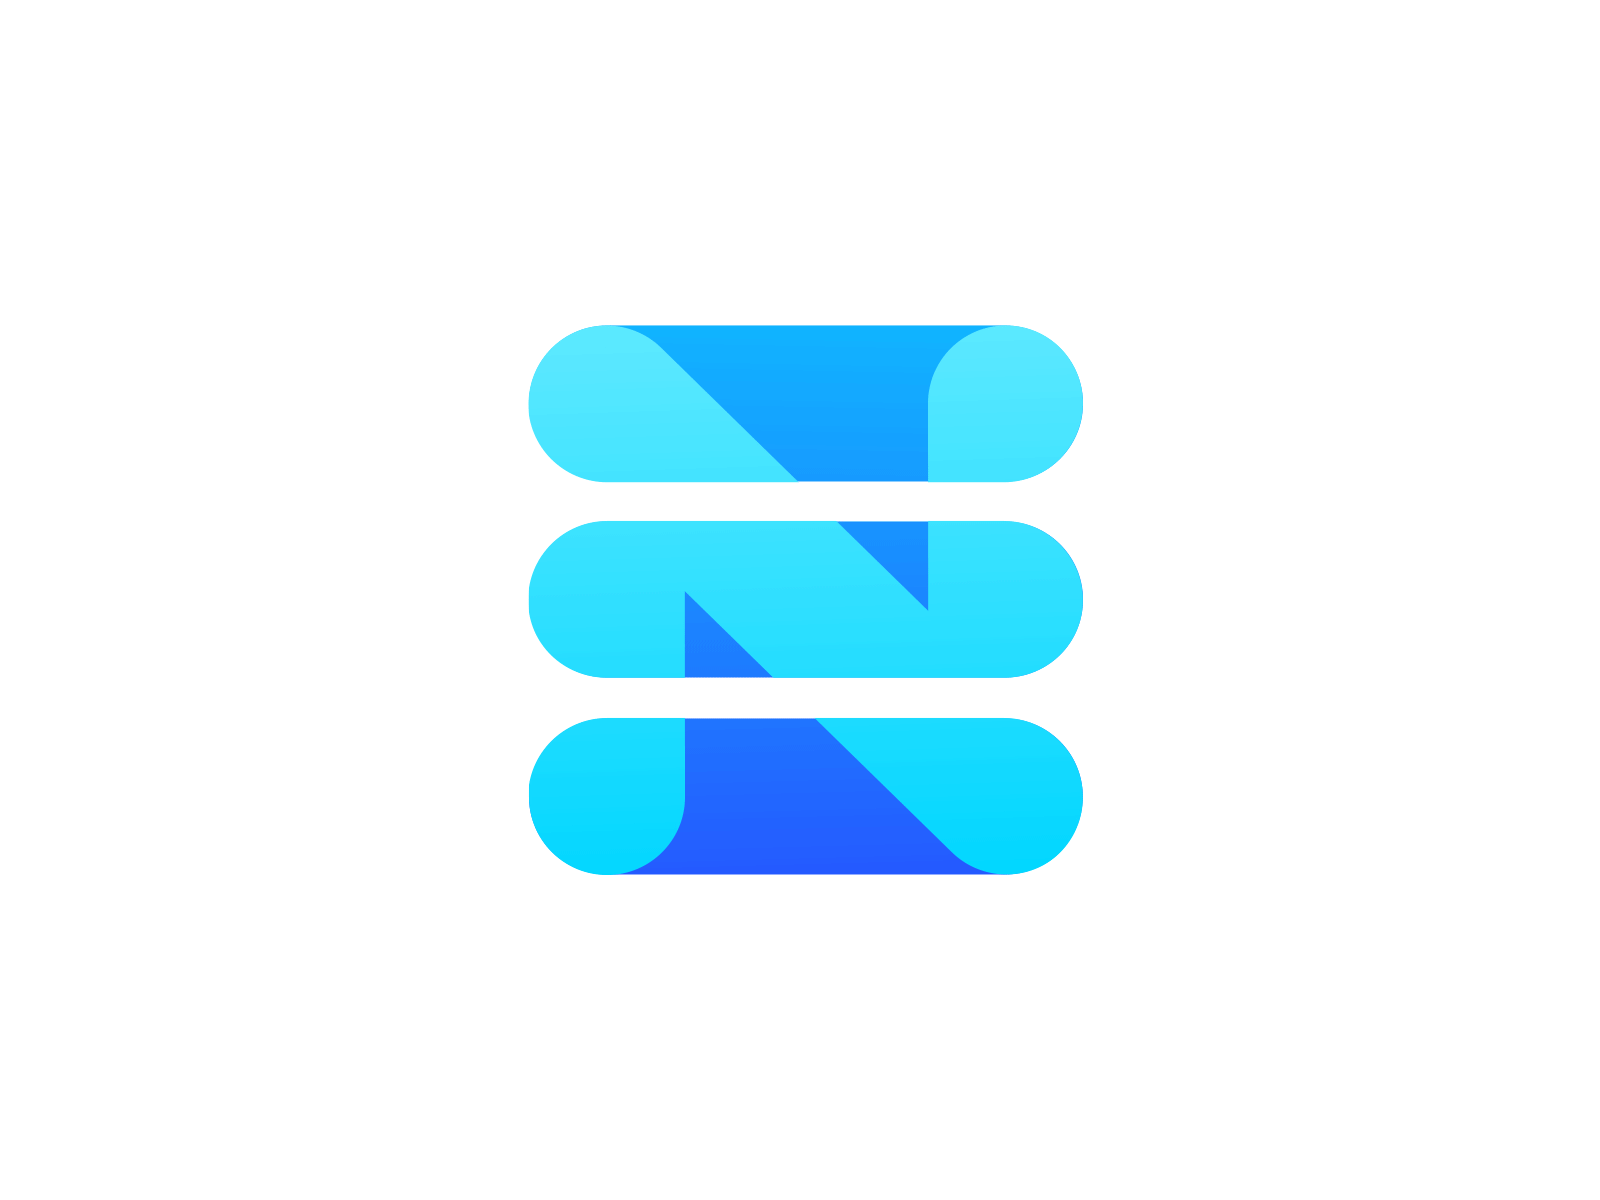 Nomeno Logo Animation by Mihai Dolganiuc on Dribbble